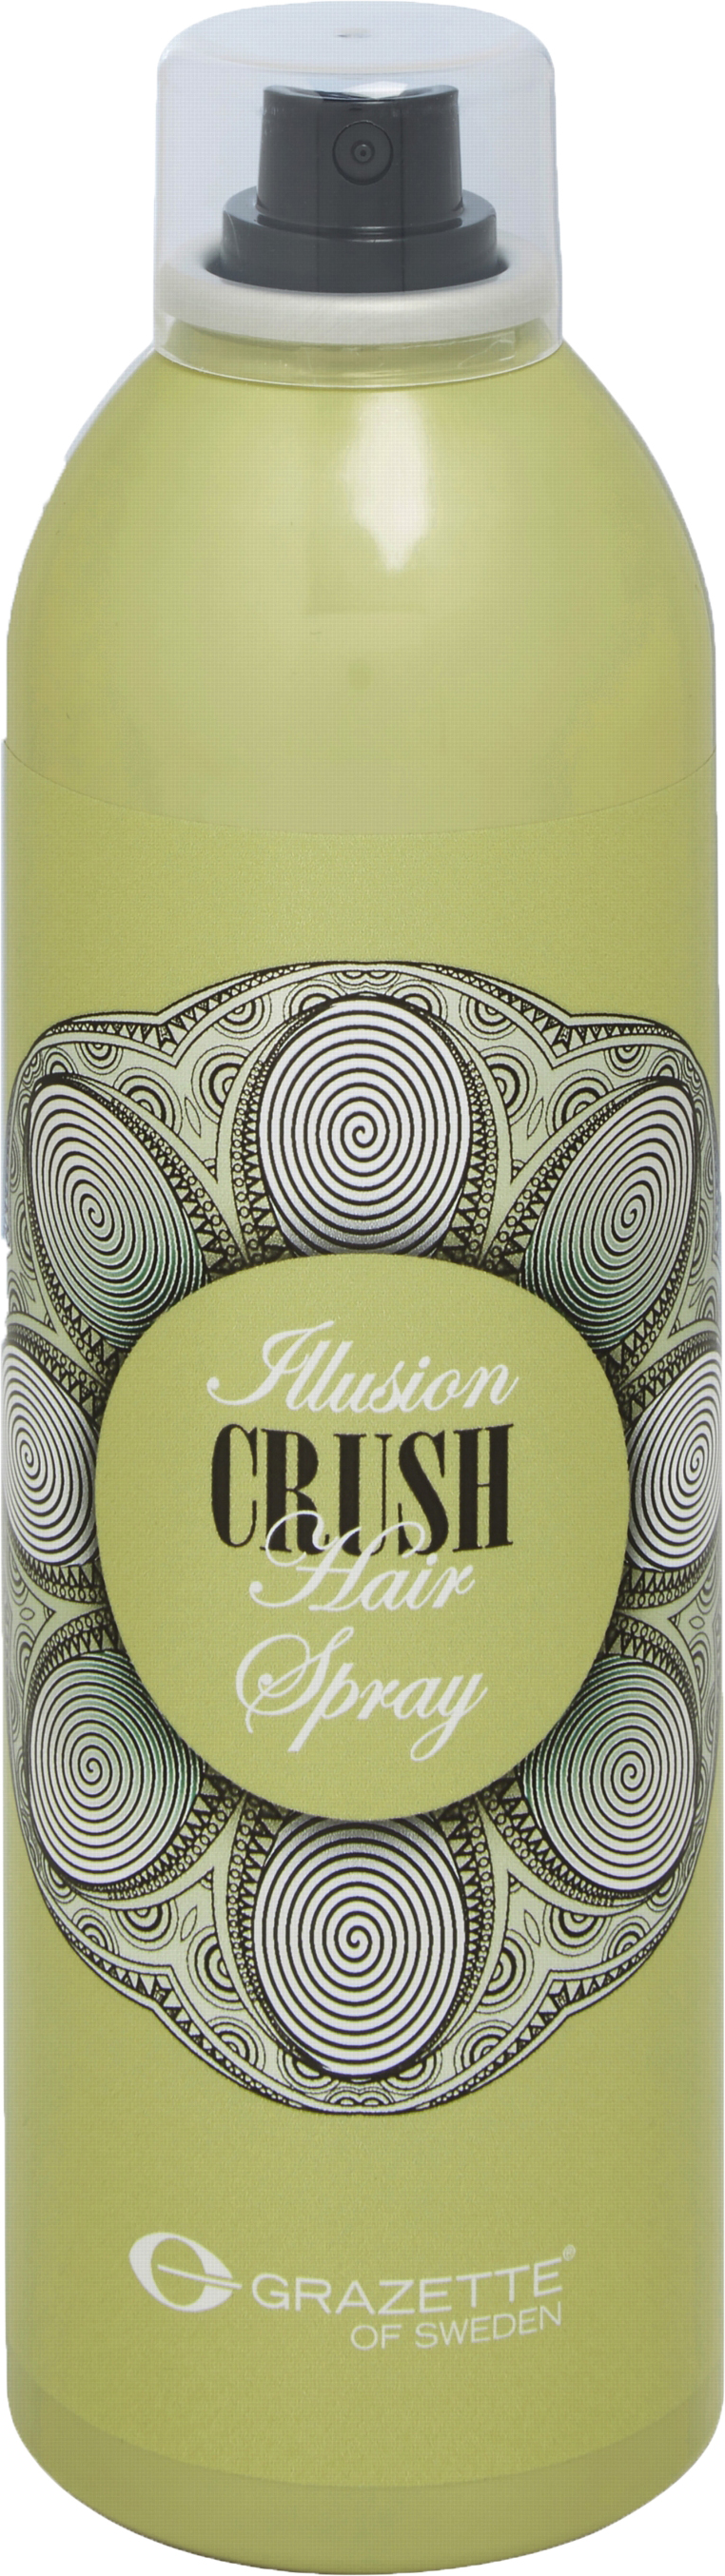 Grazette Crush Illusion Hair Spray 300ml